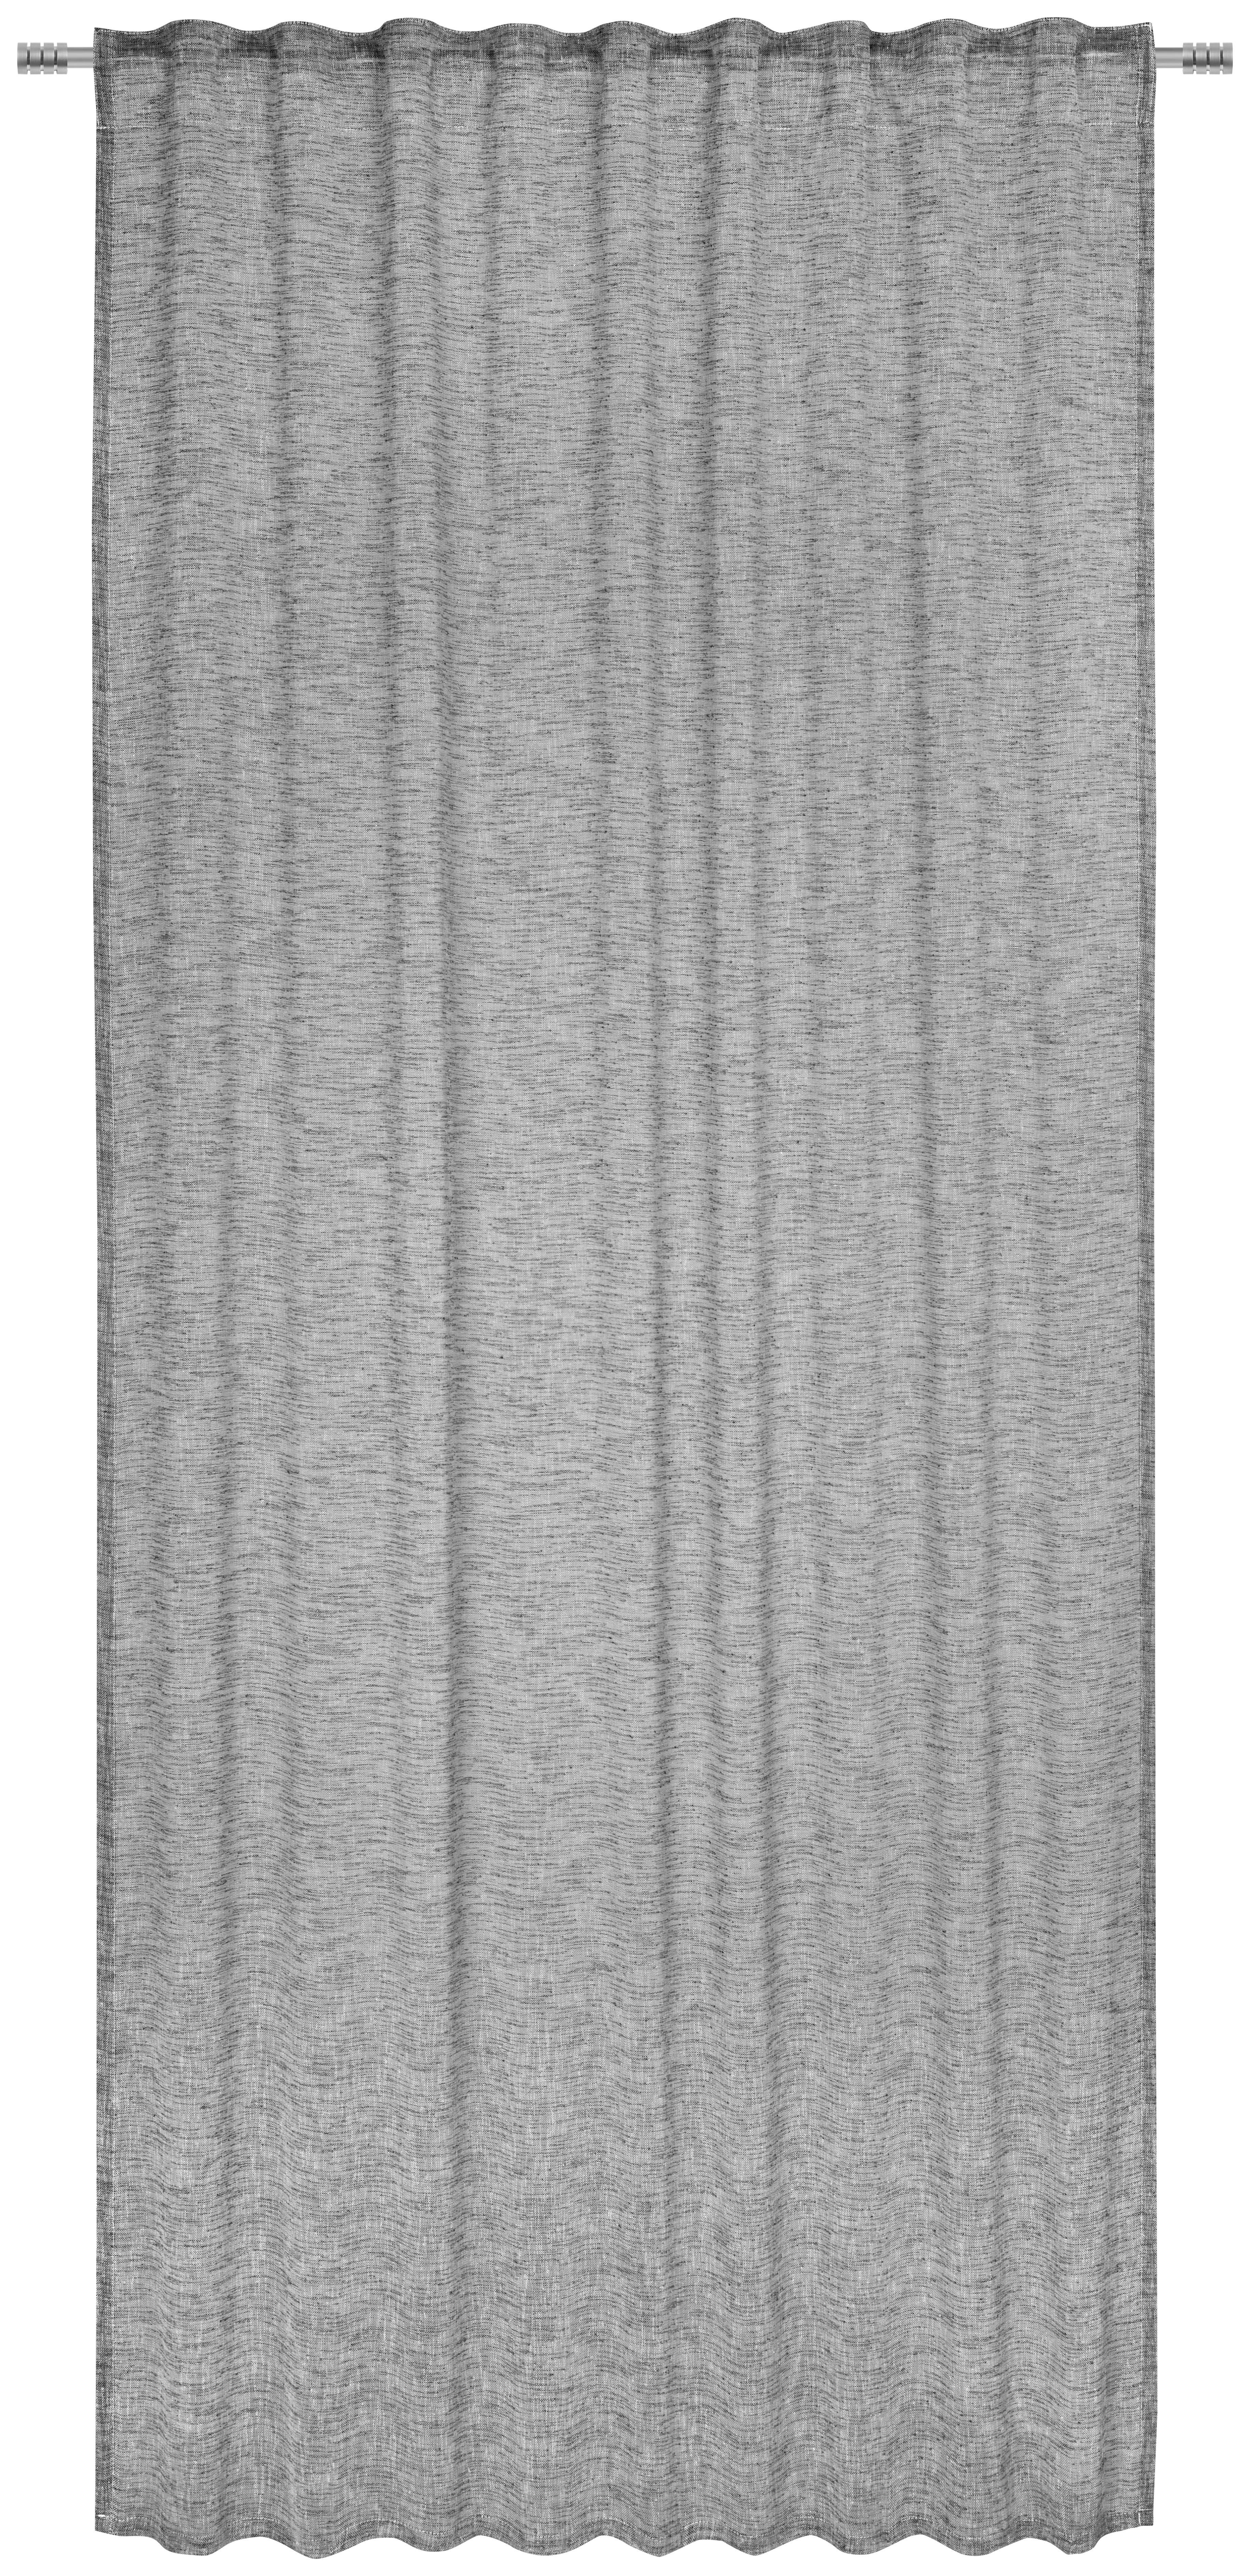 FERTIGVORHANG LANA halbtransparent 140/245 cm   - Anthrazit, Basics, Textil (140/245cm) - Esposa